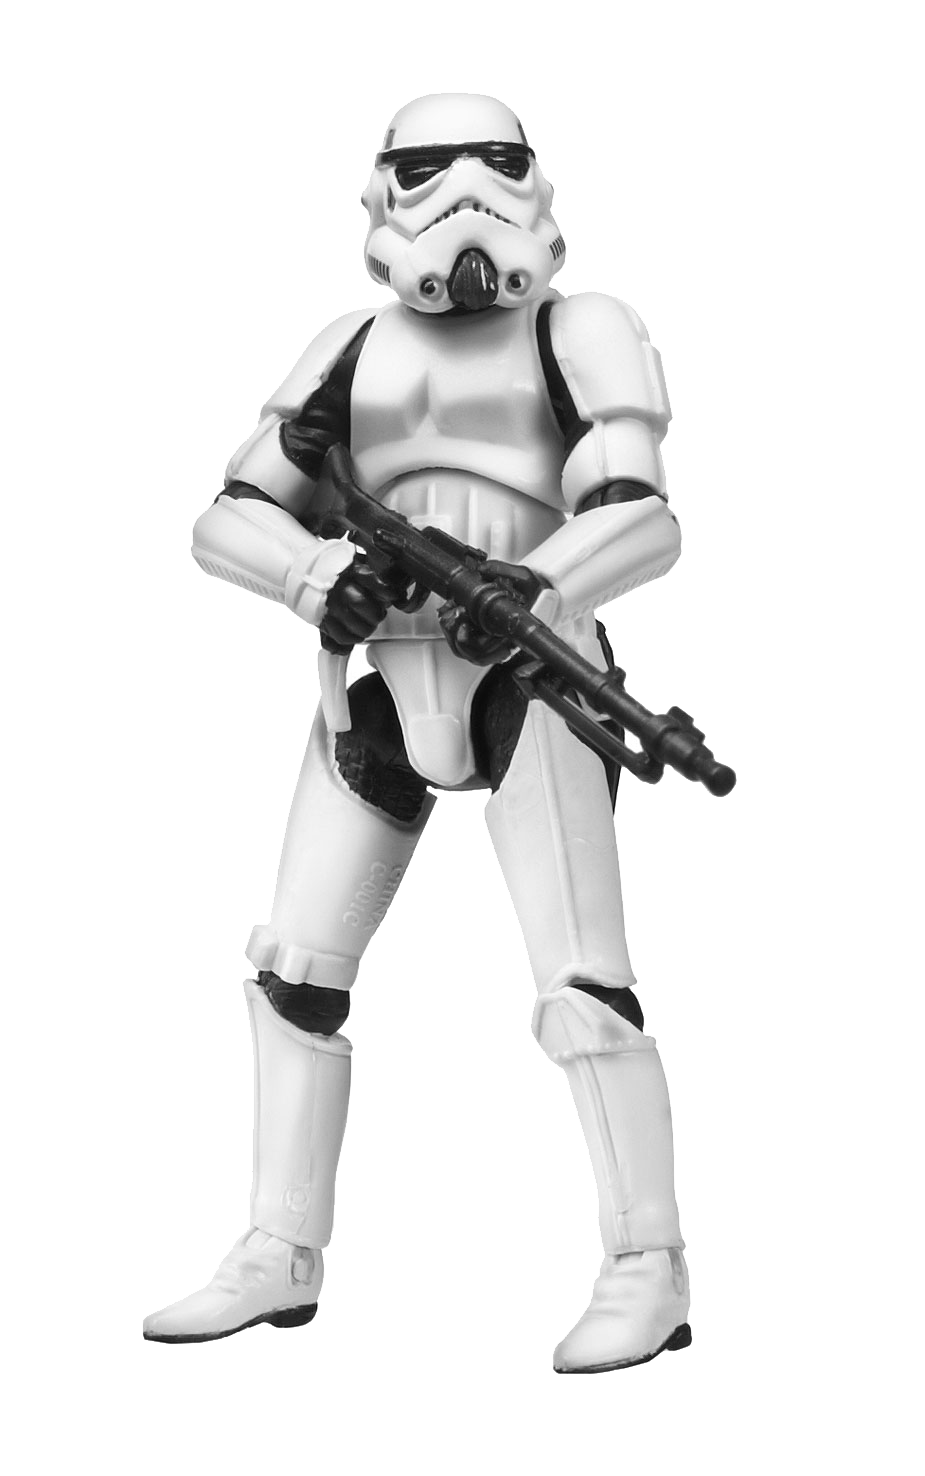 Imperial Stormtrooper صورة PNG مجانية